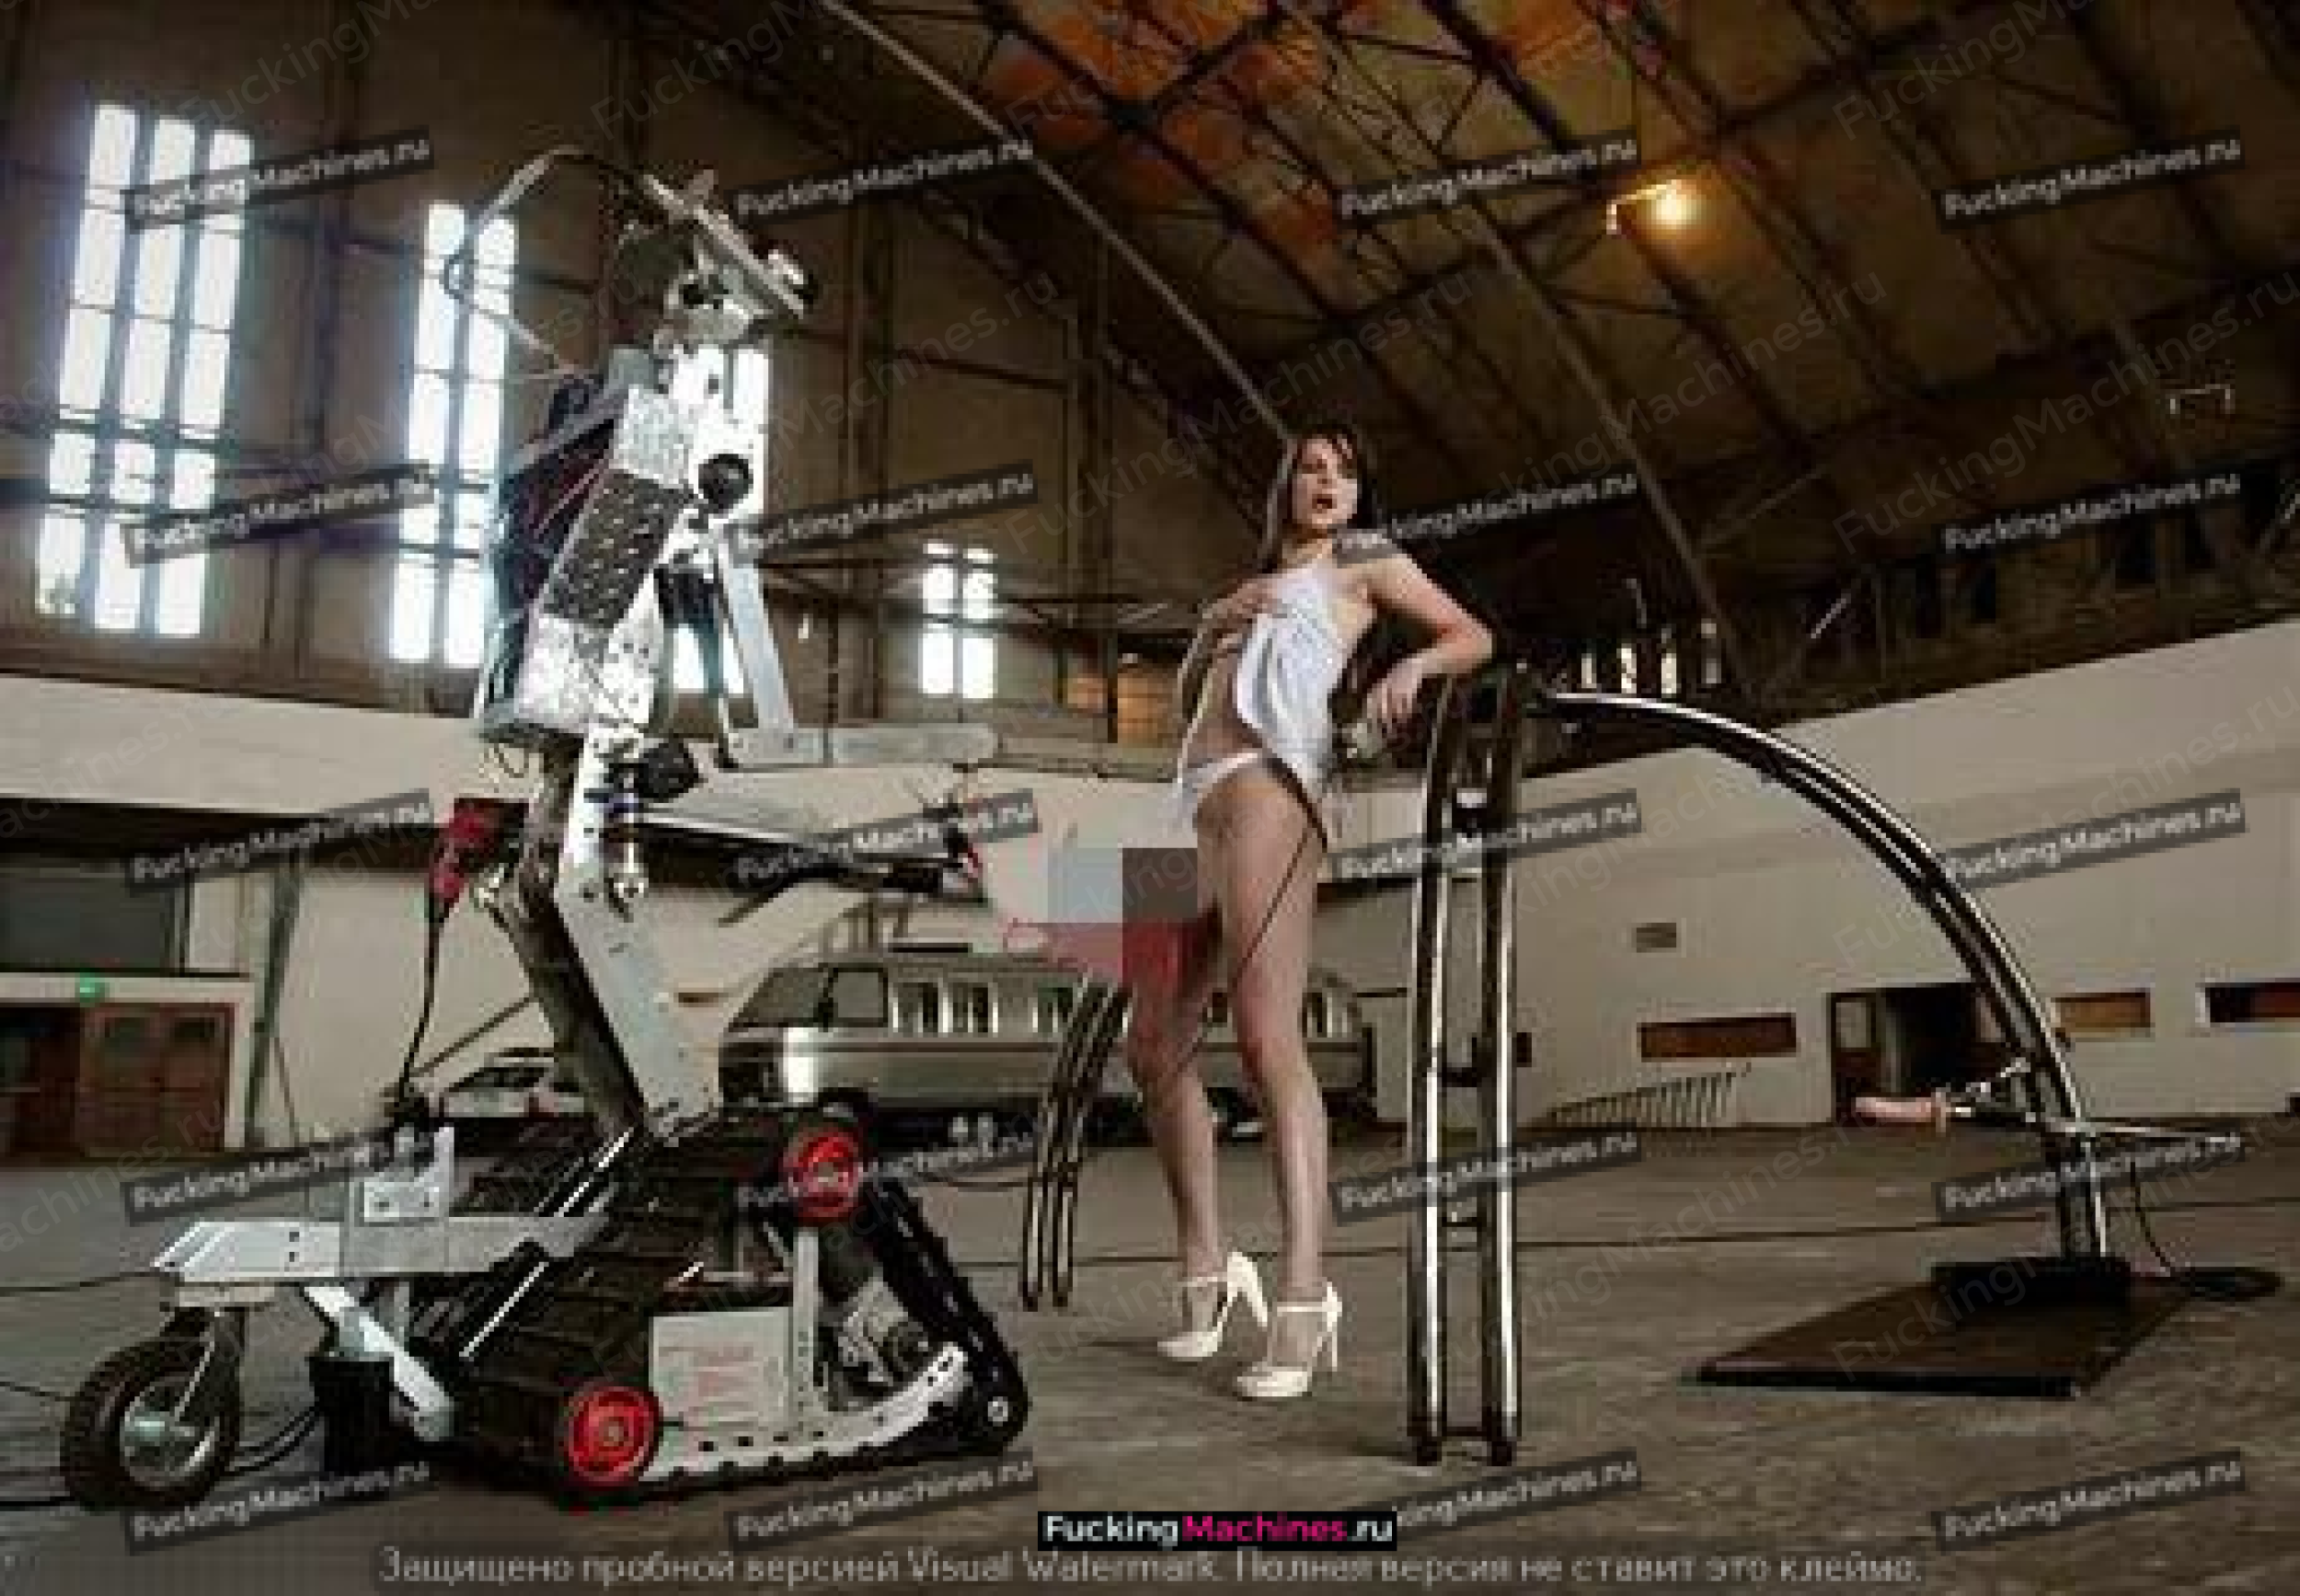 Robot Cyborg  "T-800"  FuckMachines